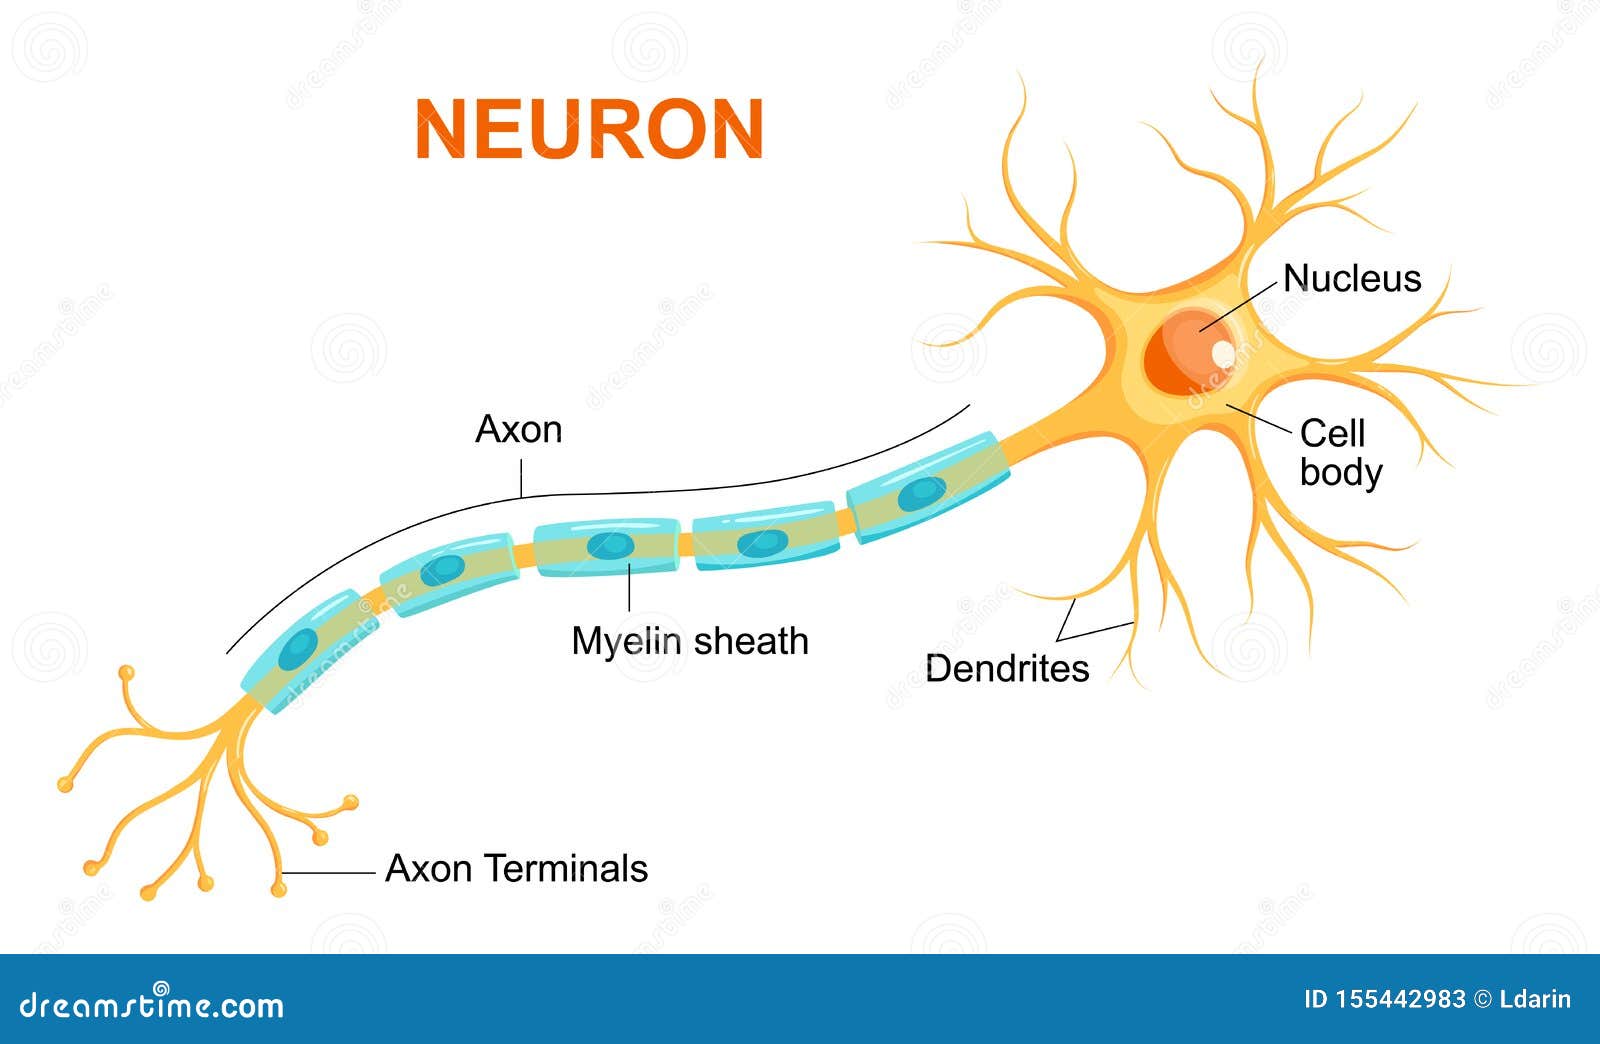  of neuron anatomy.  infographic neuron, nerve cell axon and myelin sheath